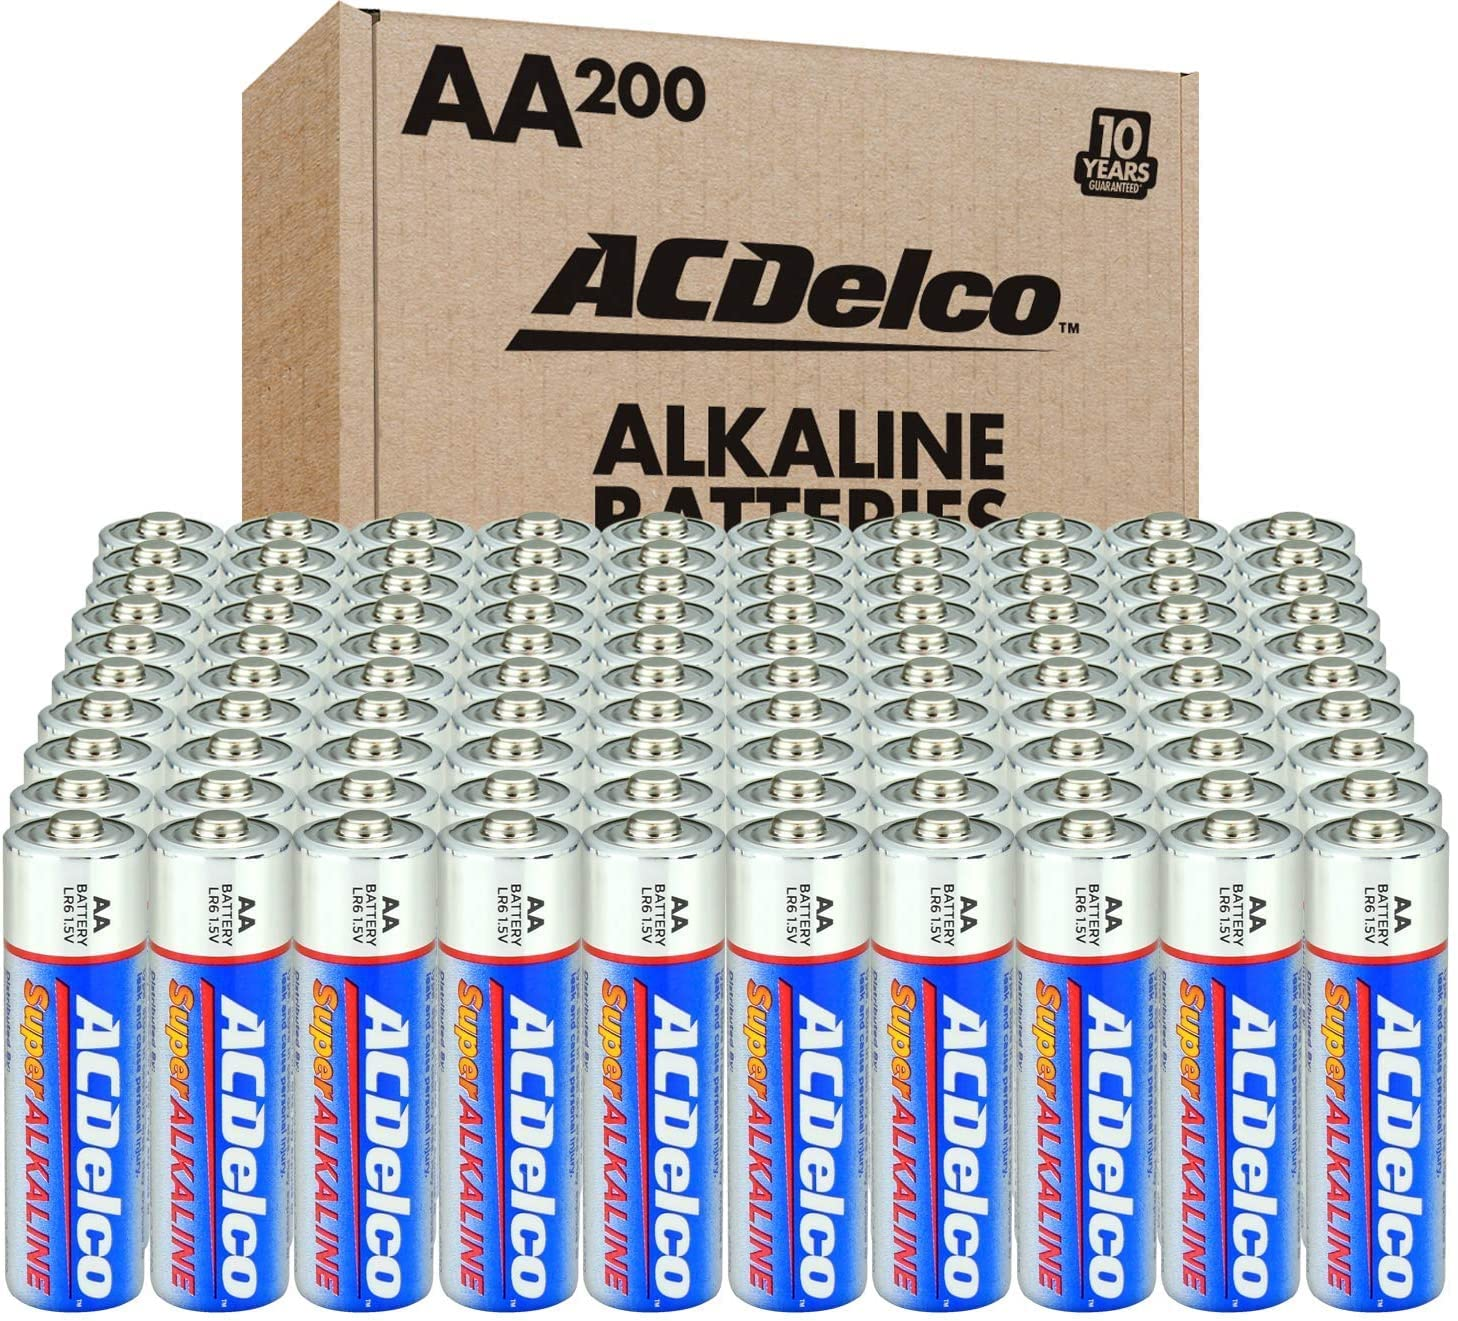 Acdelco  AA Batteries, Maximum Power Super Alkaline Battery, 10-Year Shelf Life, Recloseable Packaging, Blue